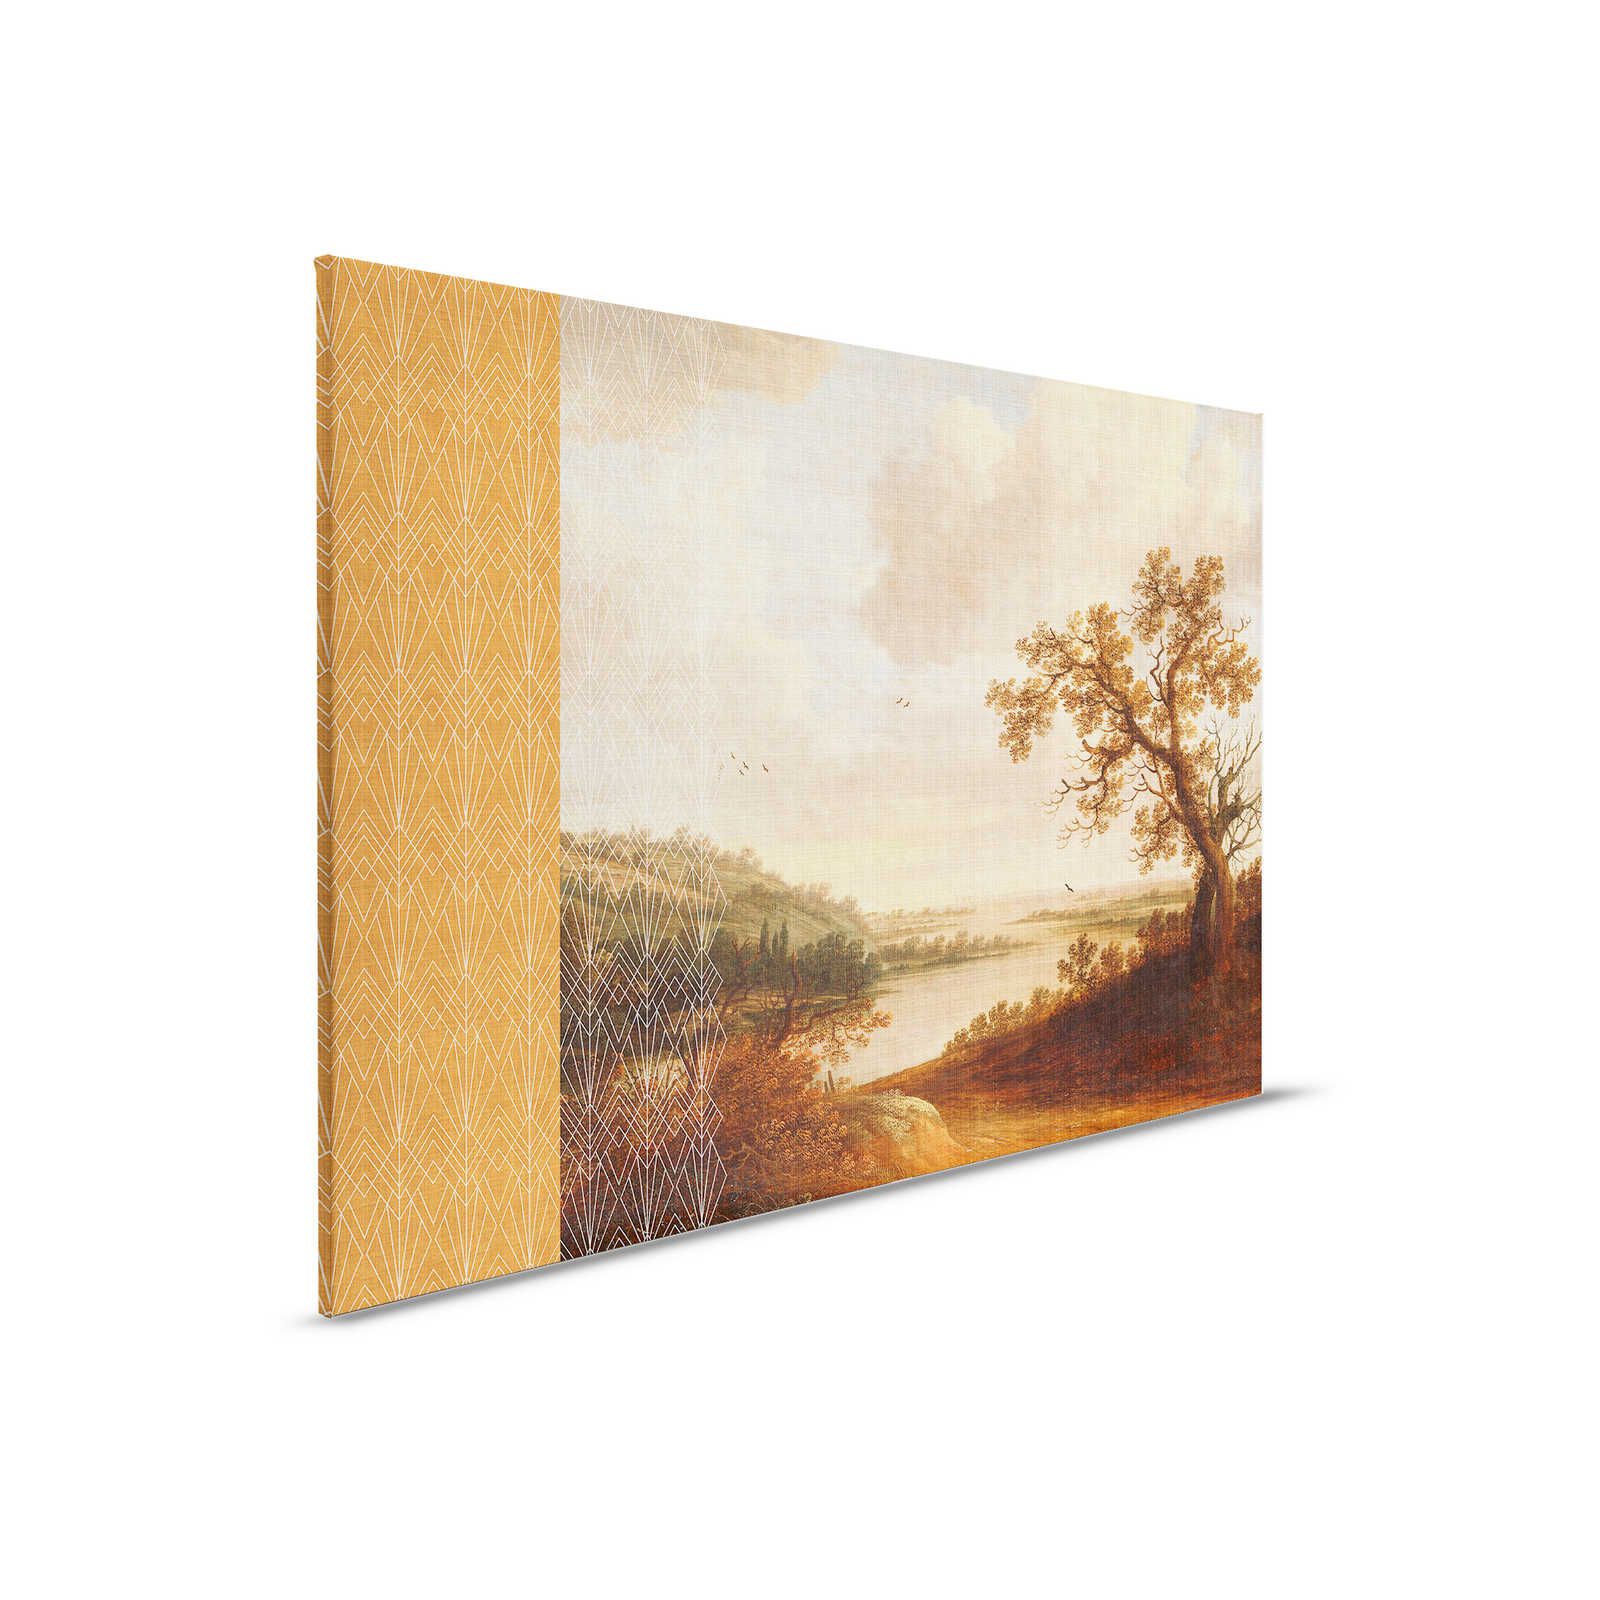         Cortina 1 - Yellow Canvas Painting Art Mix Painting & Graphic Pattern - 0.90 m x 0.60 m
    